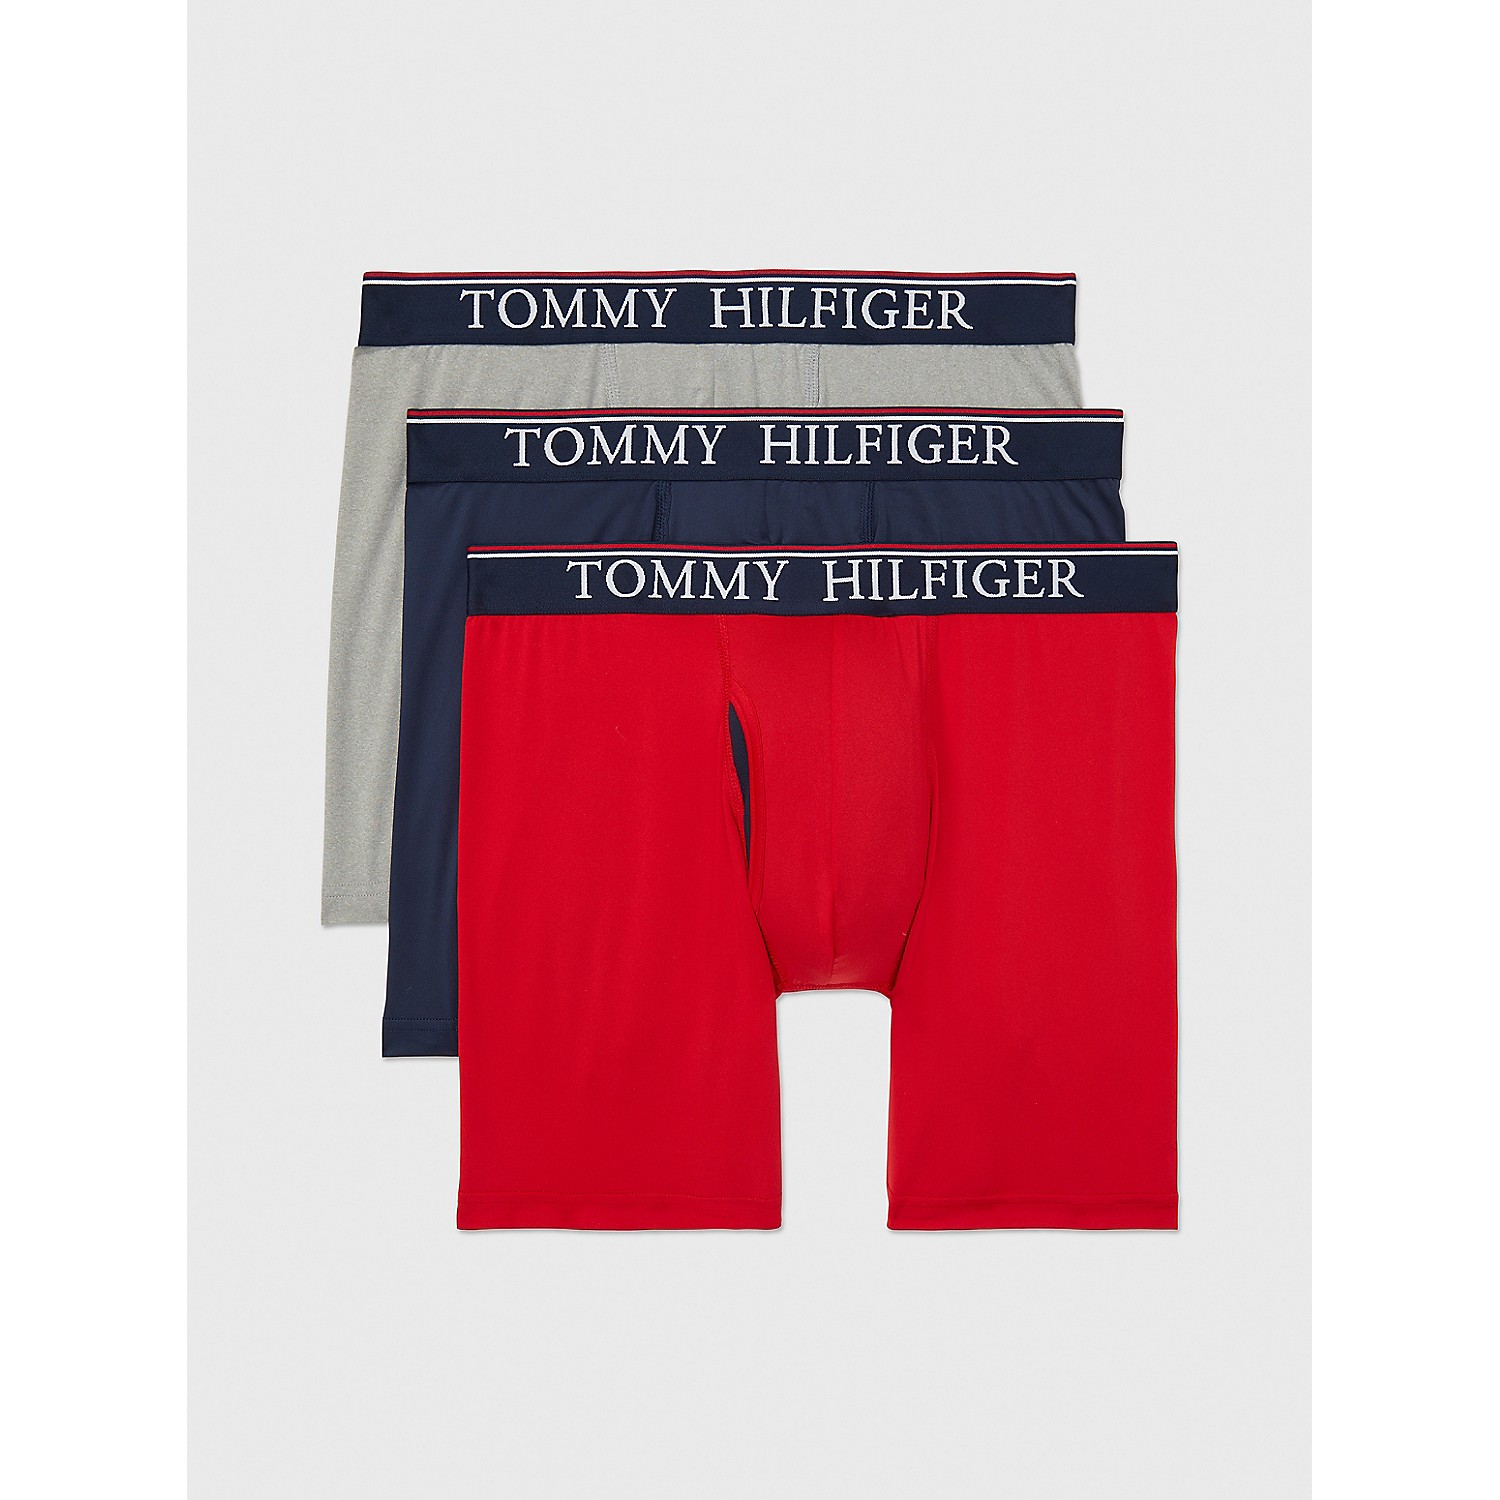 TOMMY HILFIGER Cool Microfiber Boxer Brief 3-Pack